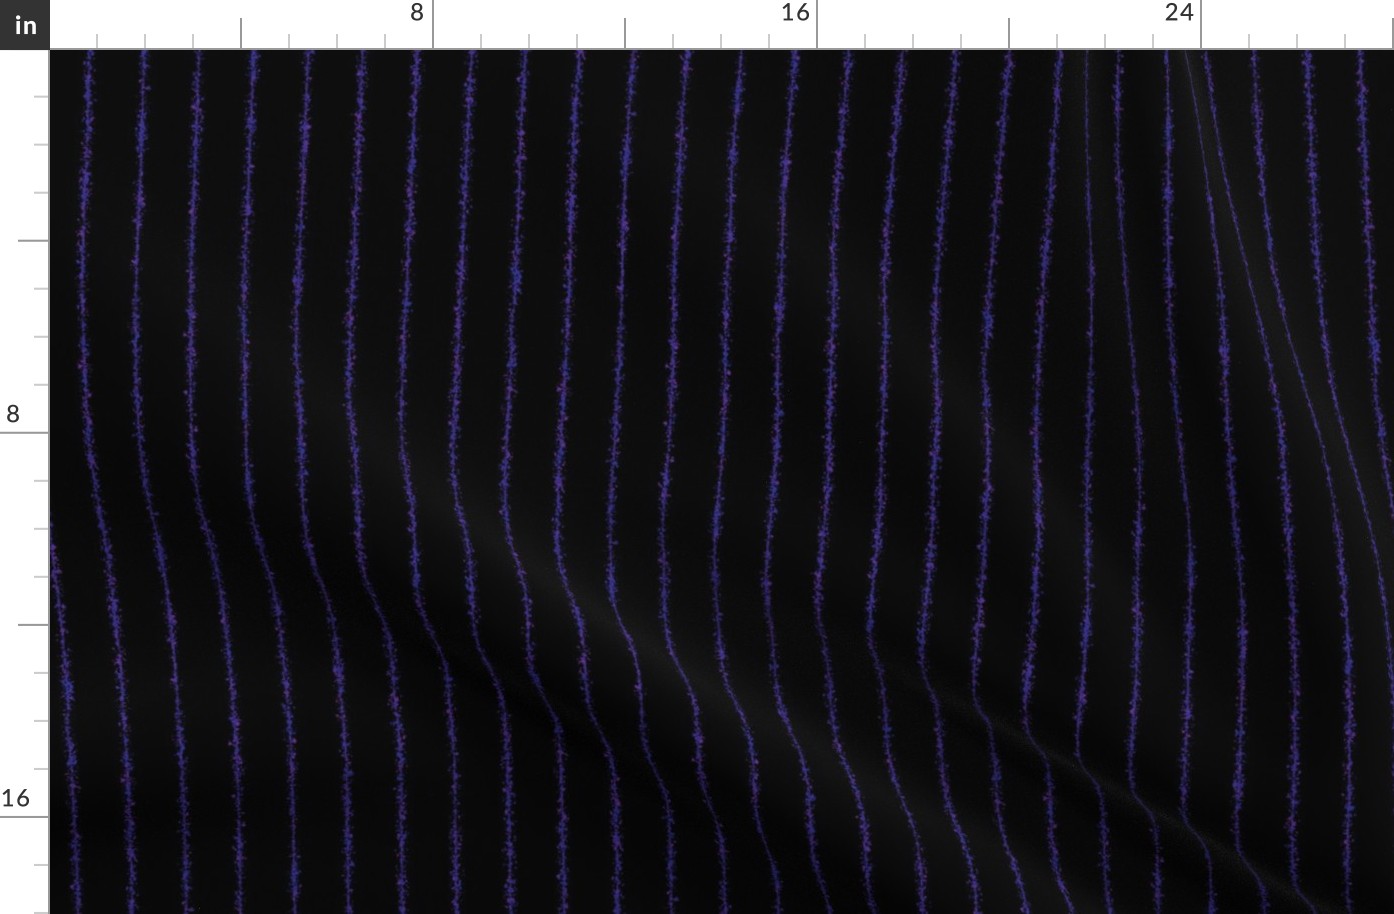 Splatter Pinstripe: Purple + Black